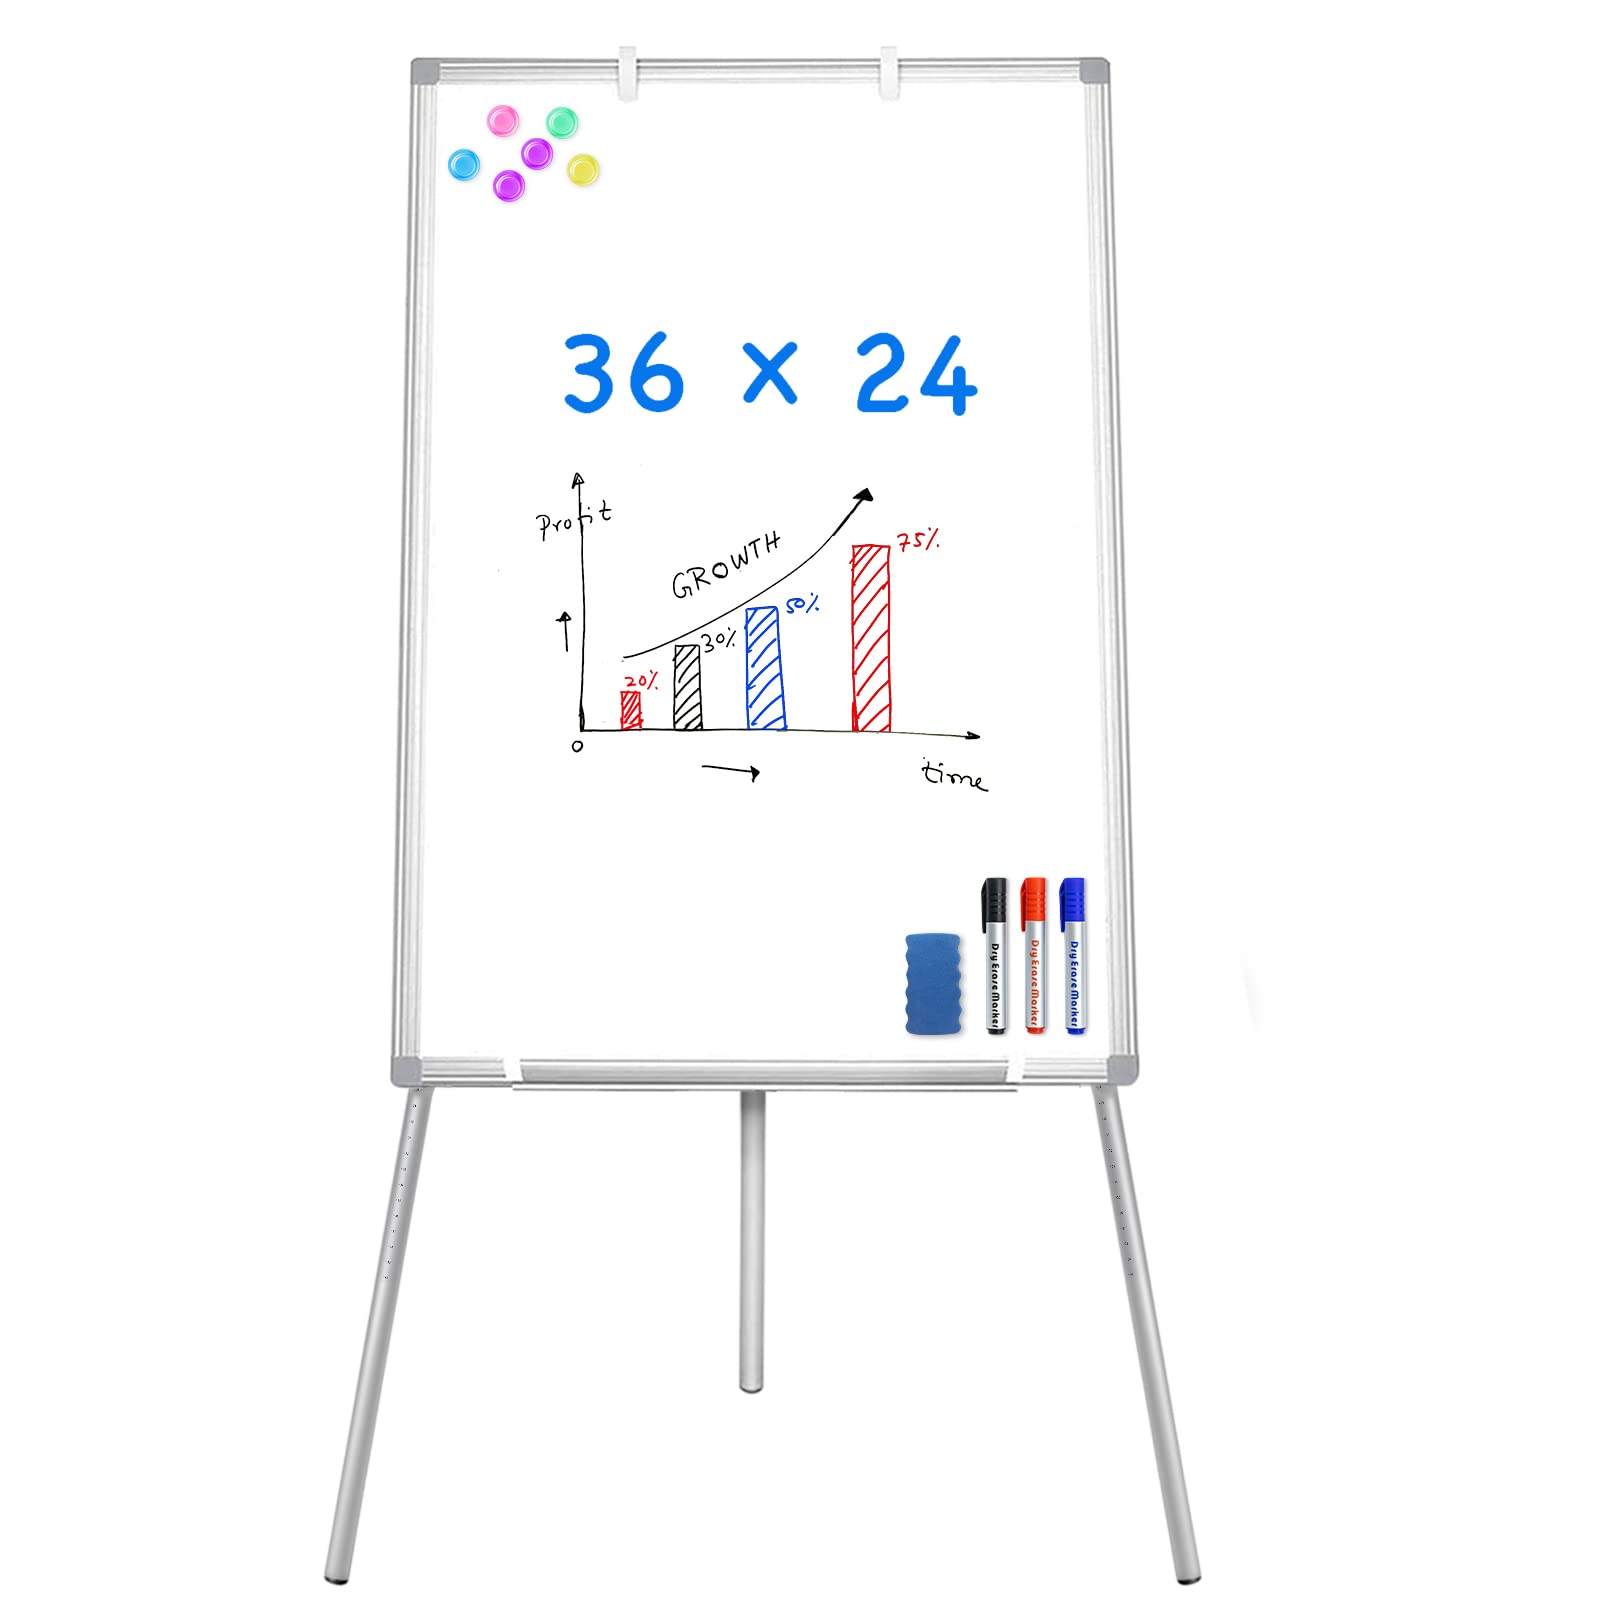 maxtek 画架白板 - 磁性便携式干擦画架板 36 x 24 三脚架白板高度可调节活动挂图画架支架白板适合办公室或家庭和教室教学